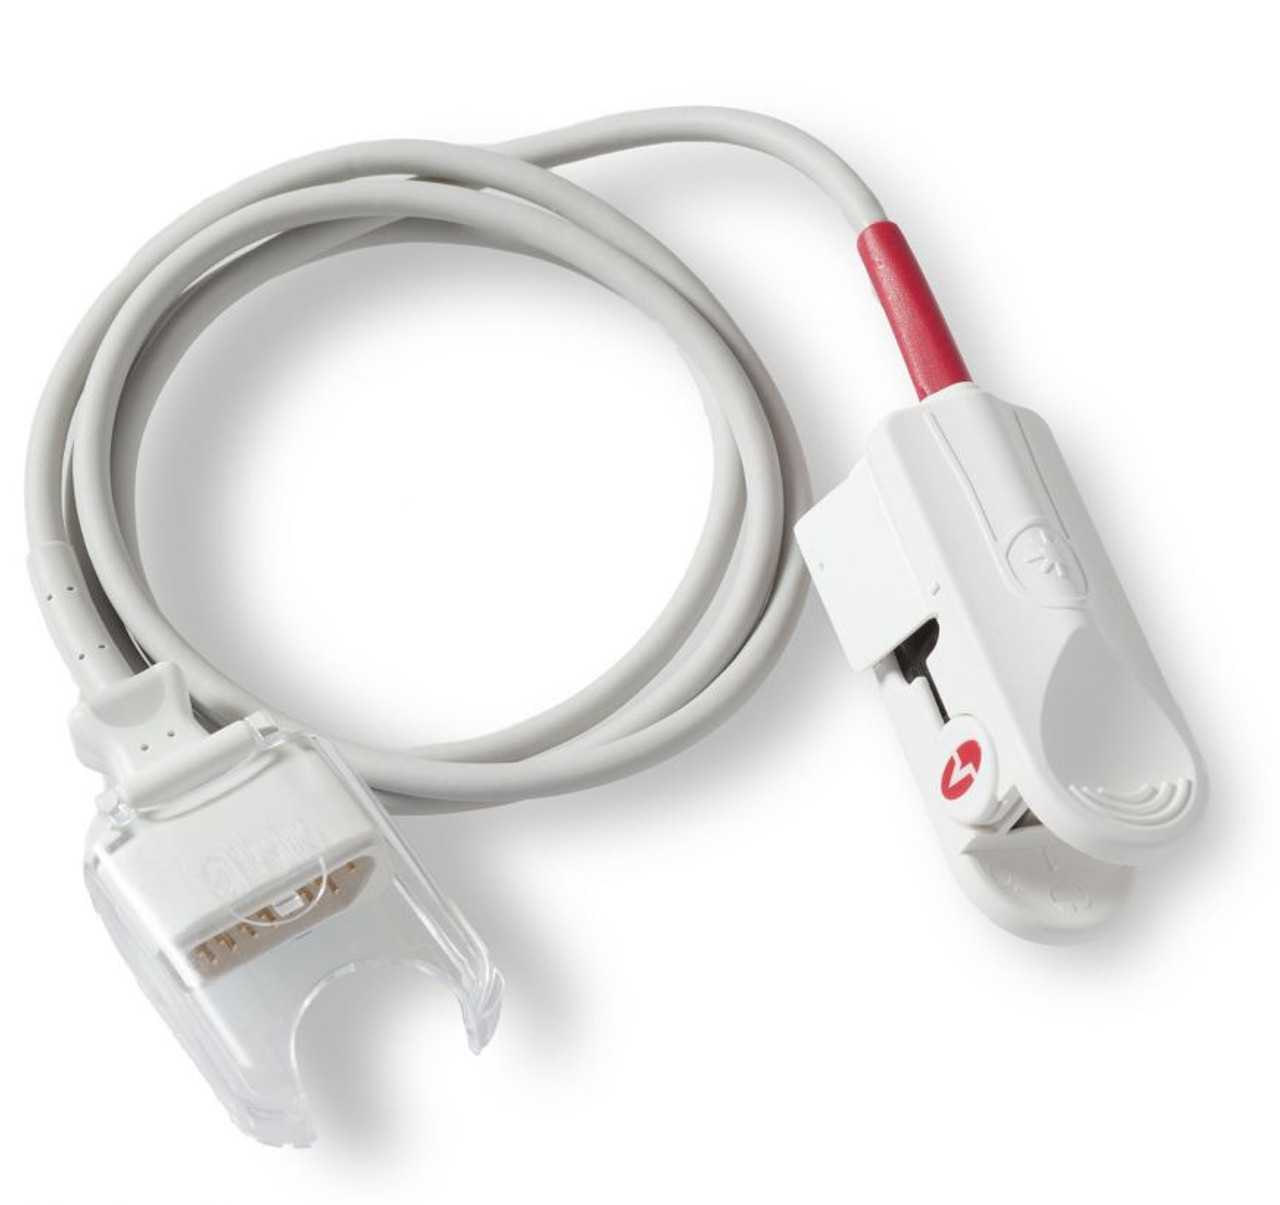 Zoll Patient Cable, Rainbow, Adult, Reusable, For SpO2/SpCO/X- Series SPMet